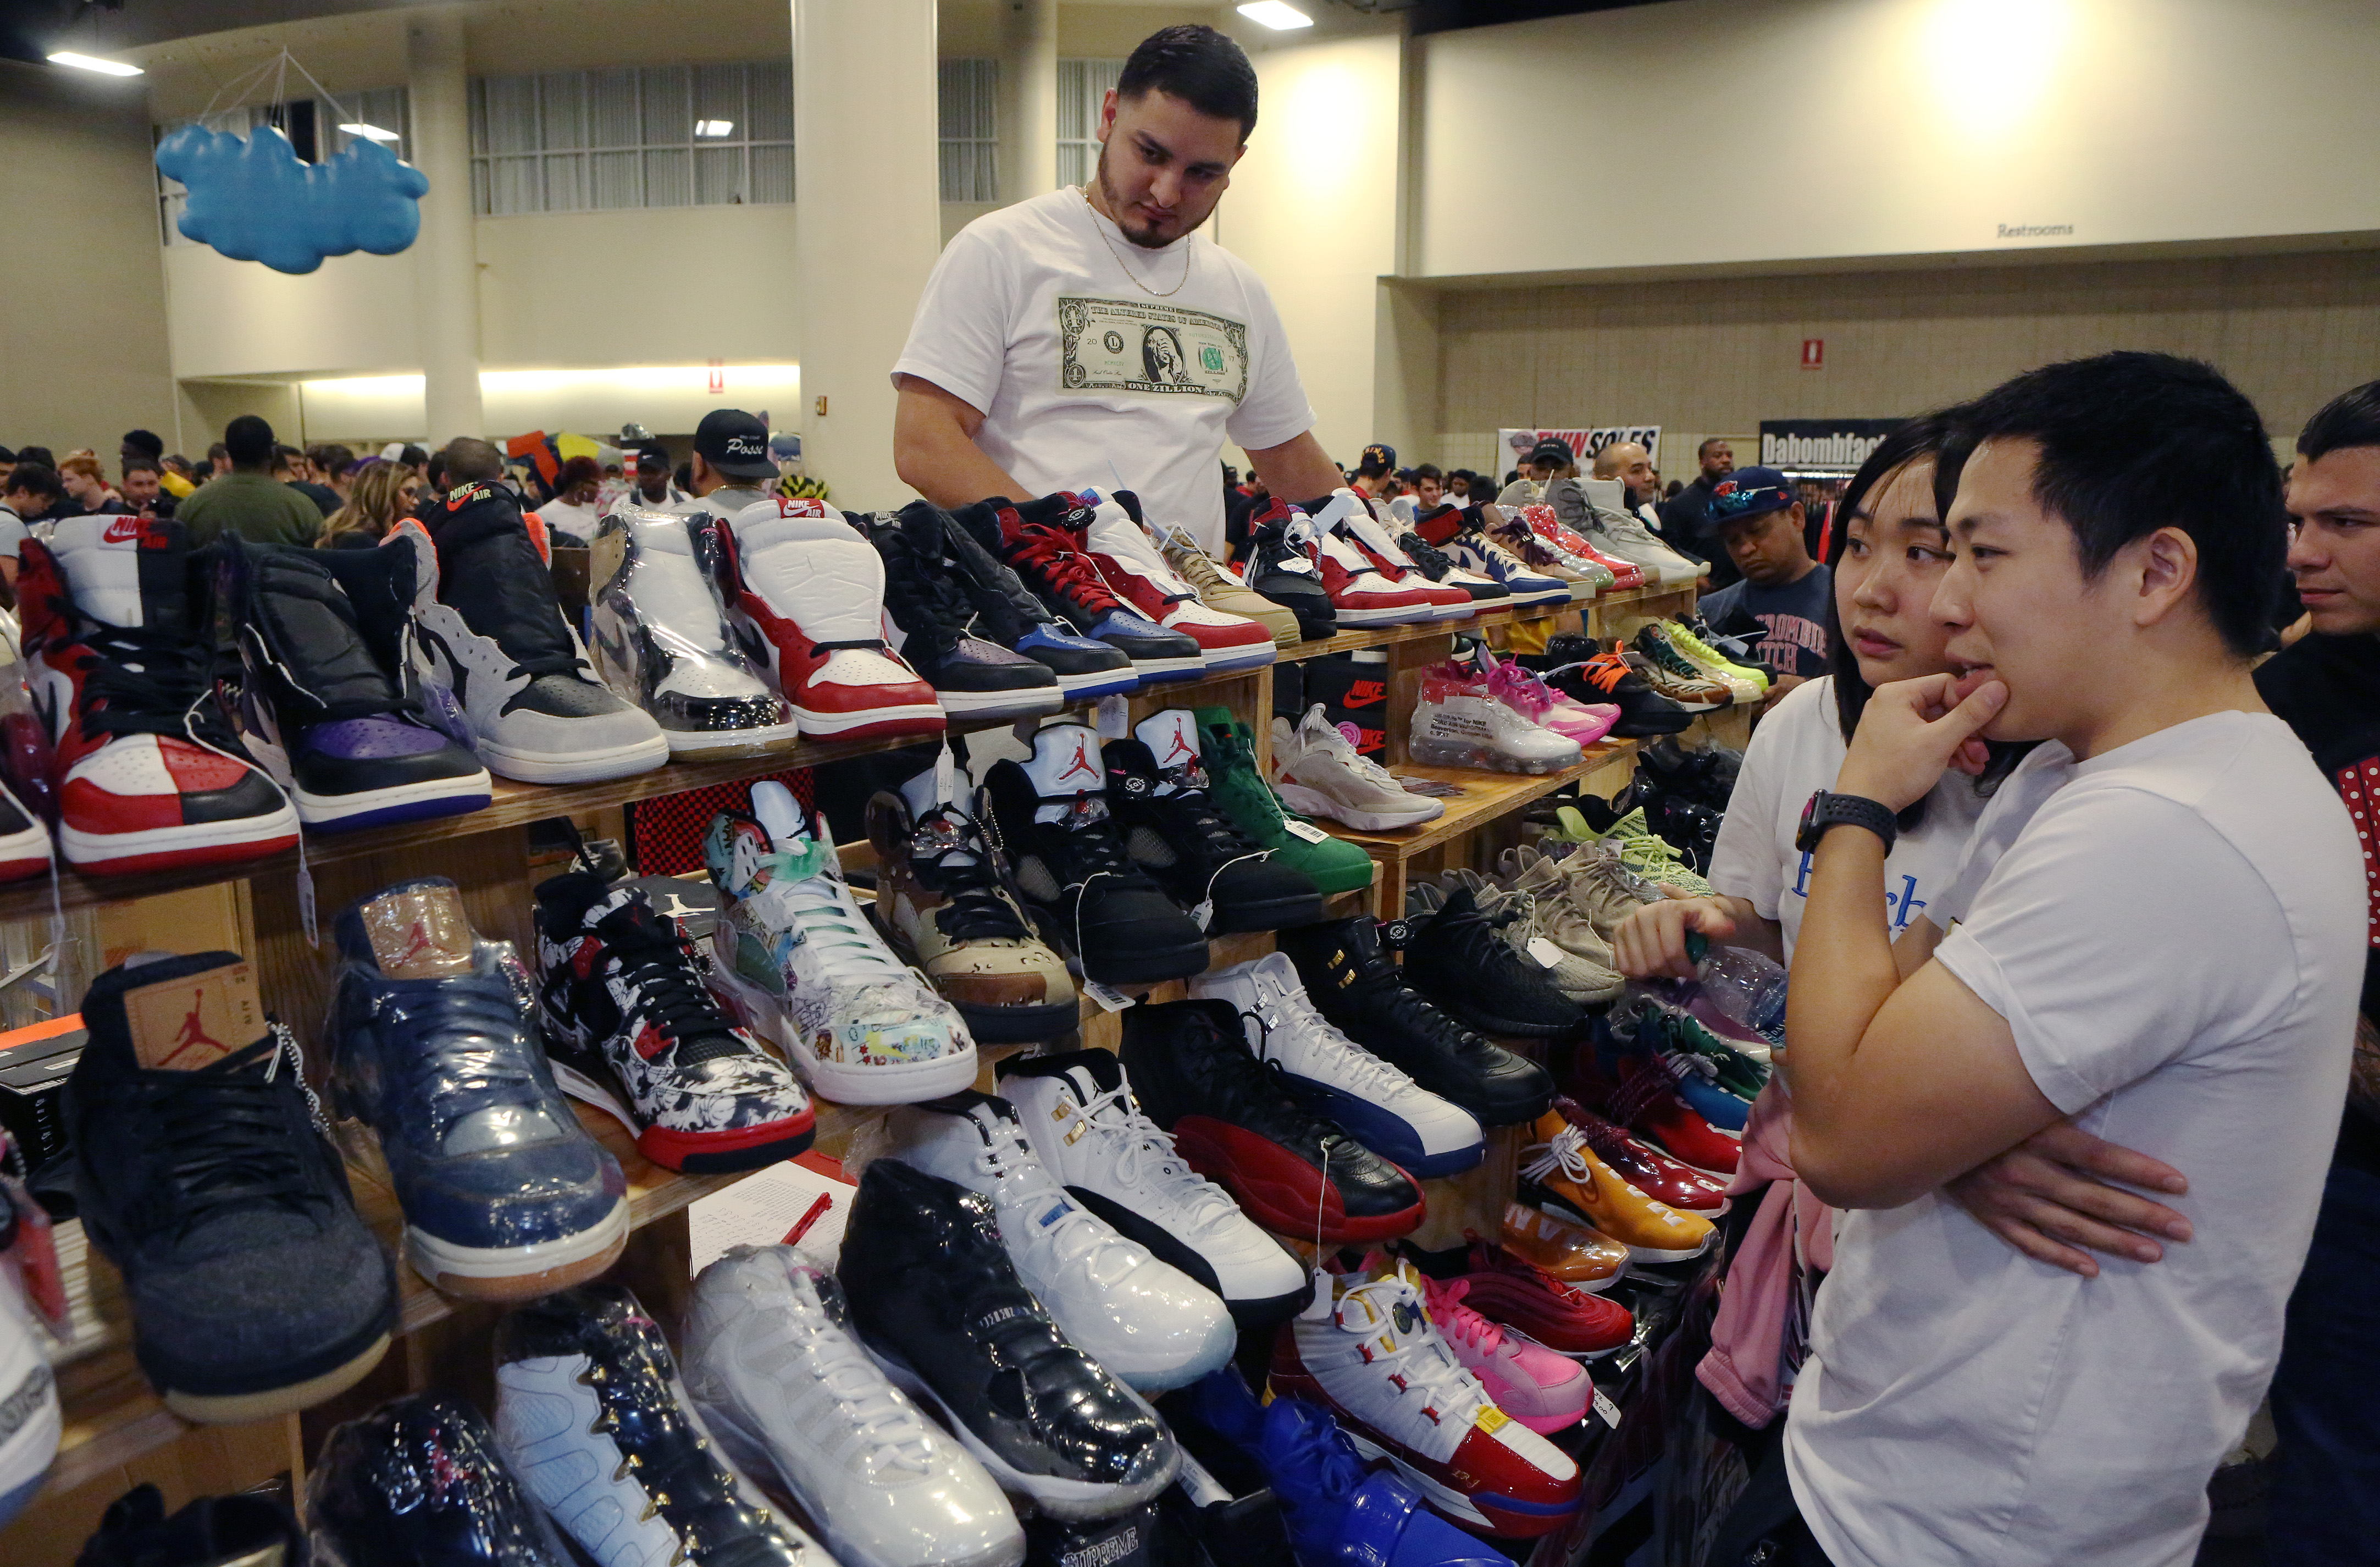 forskel drikke Assimilate The global sneaker resale market could reach $30 billion by 2030